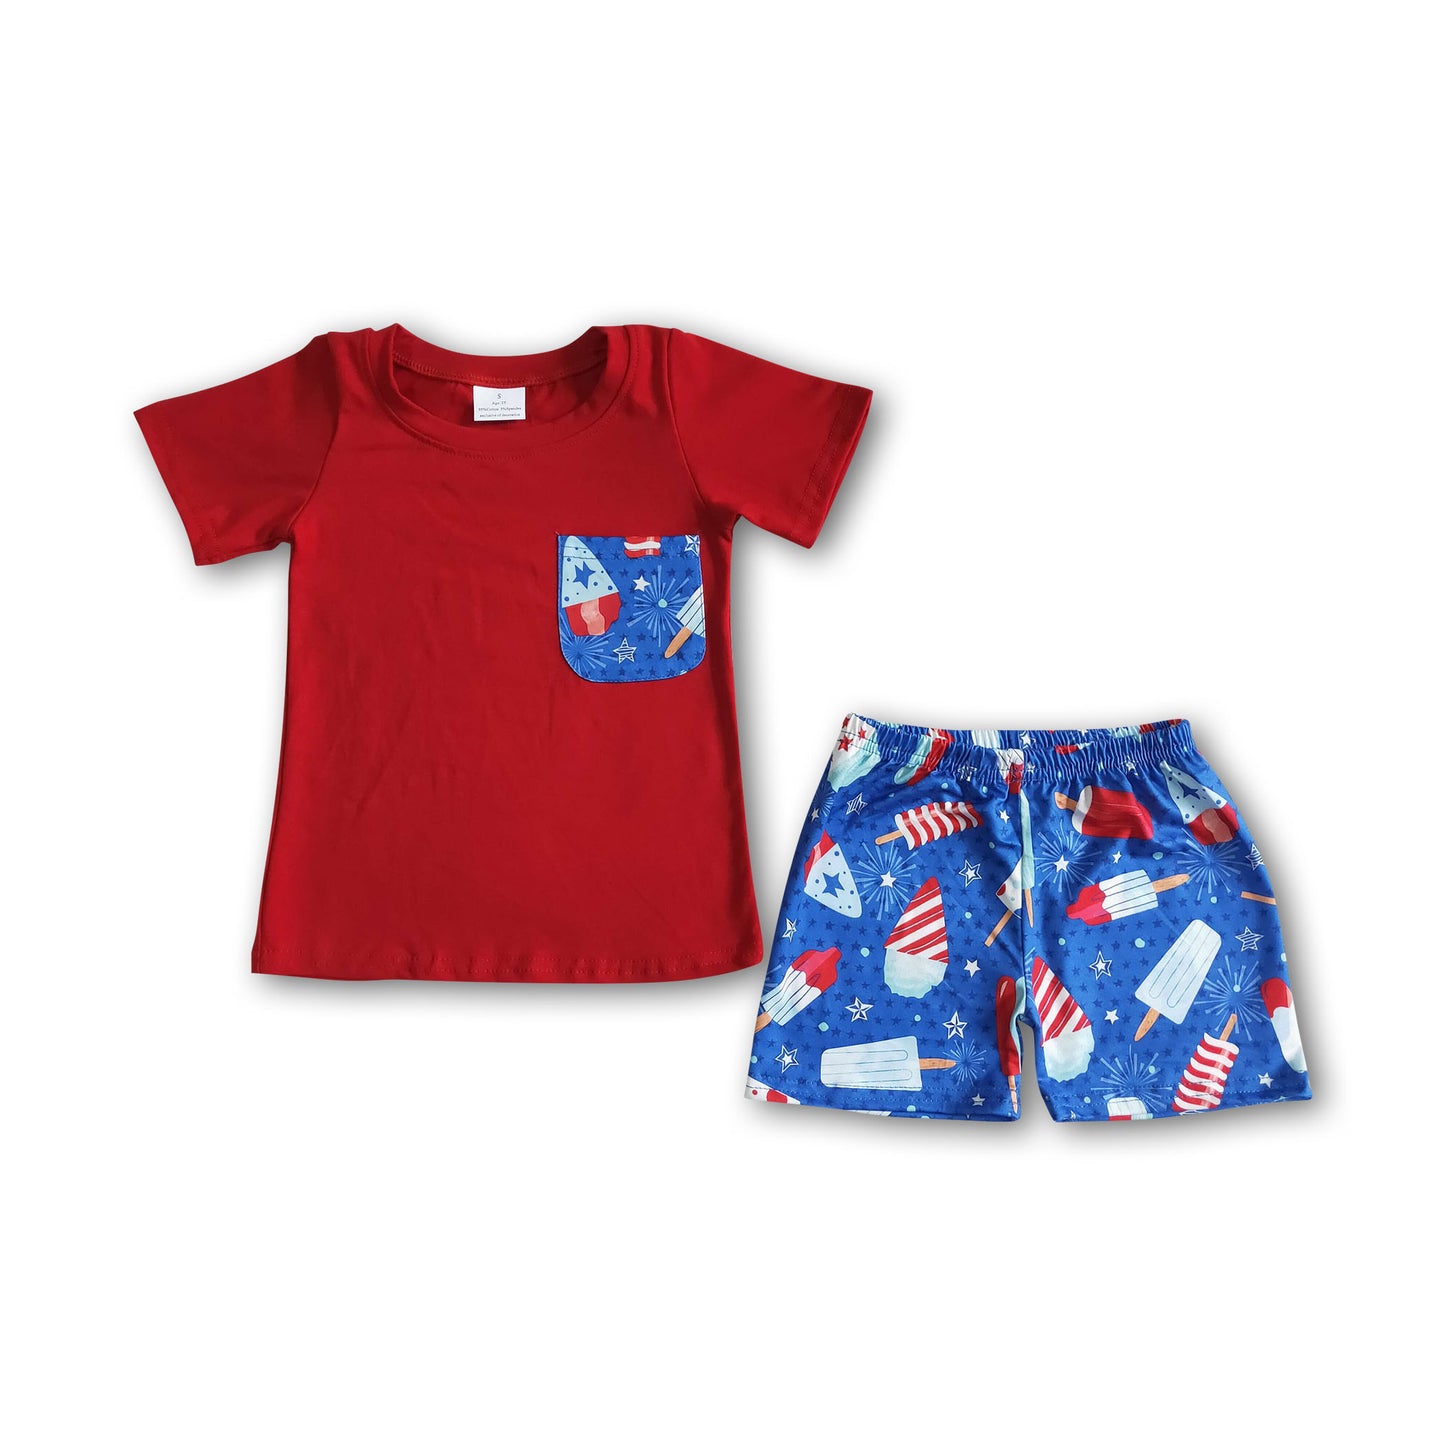 Red pocket shirt popsicle boy clothing set